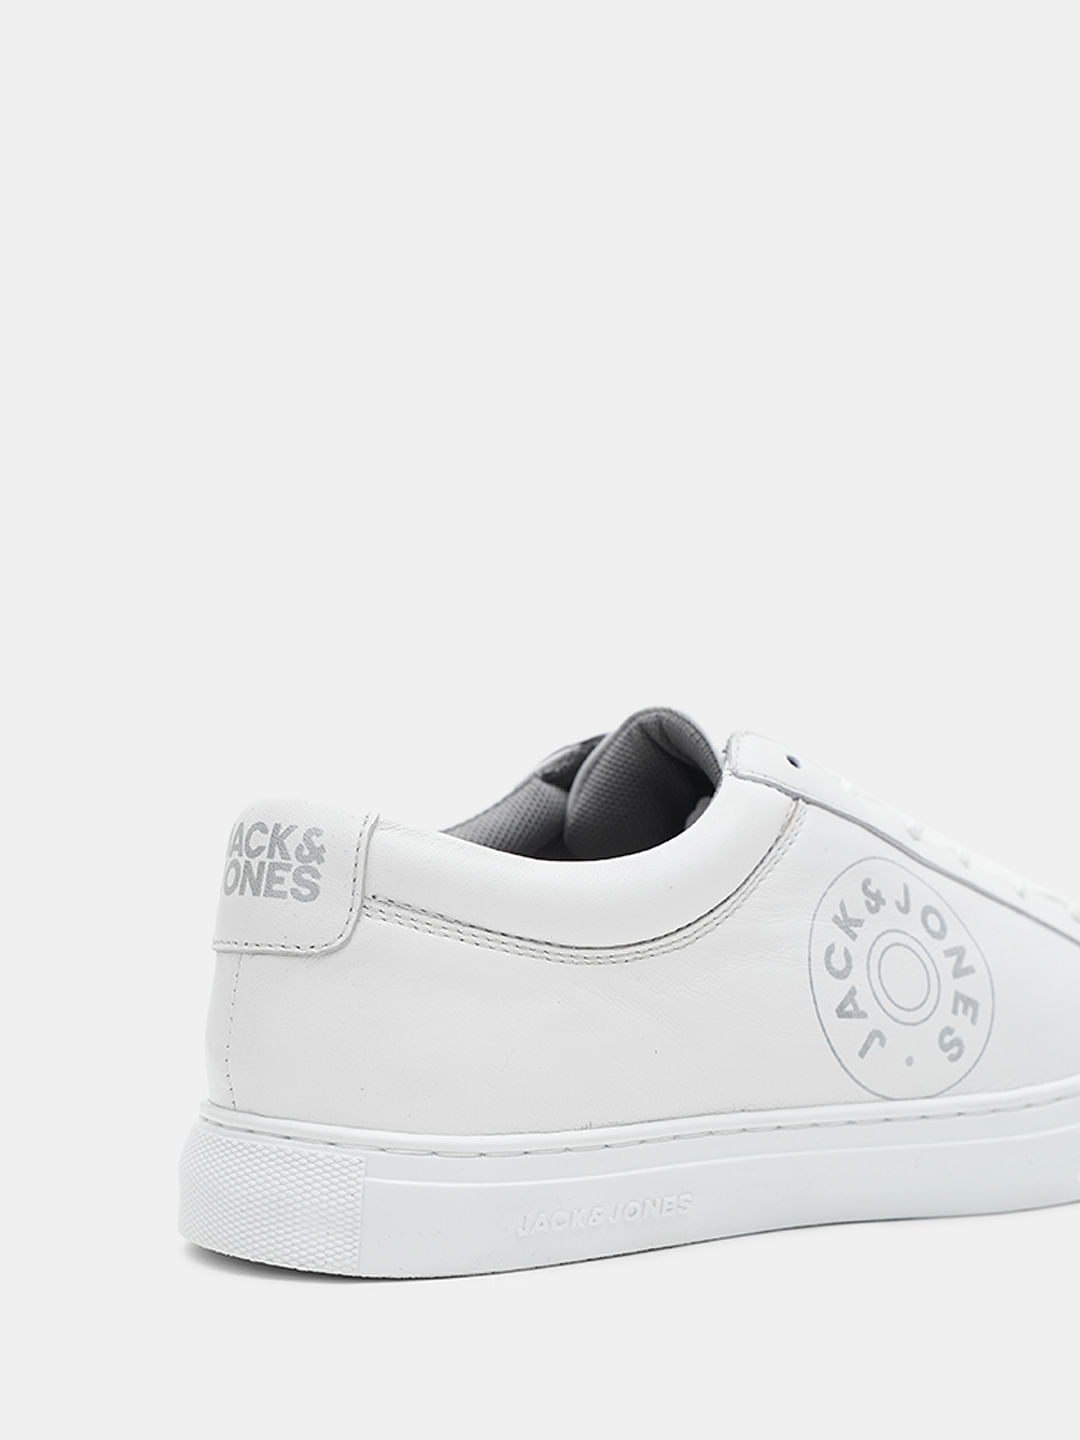 White Leather Sneakers|248755206-White